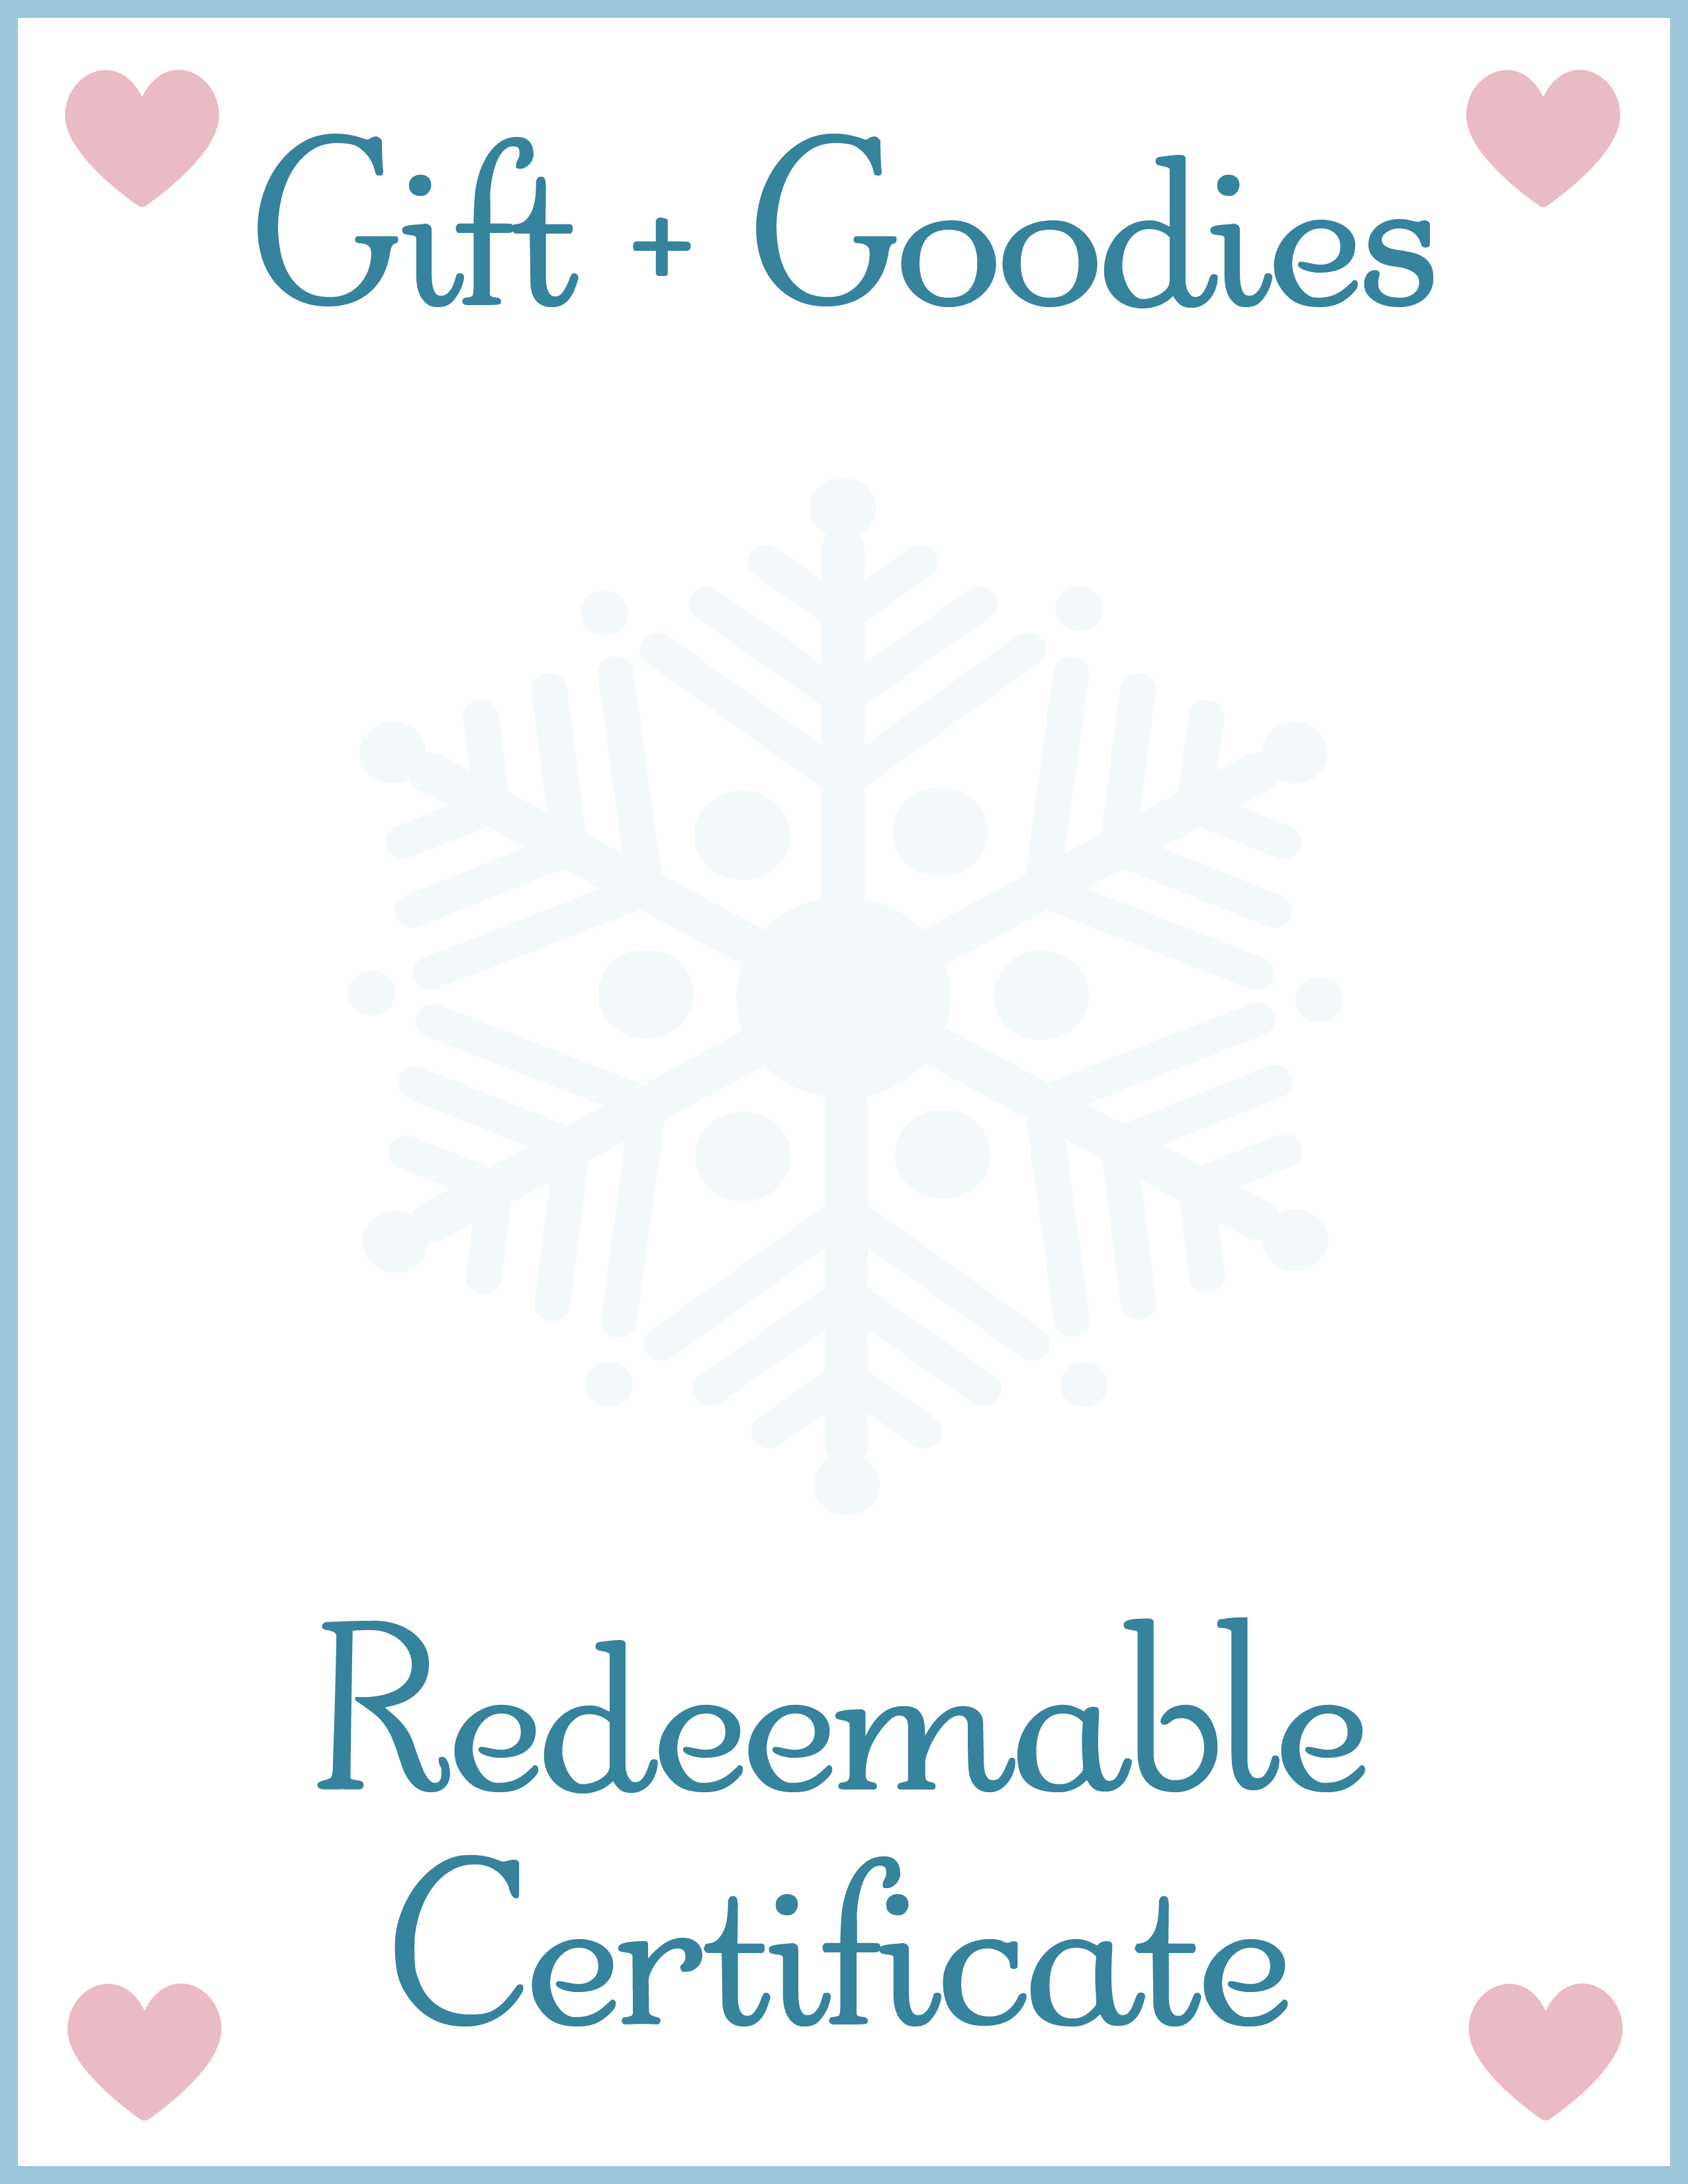 Gift + Goodies Redeemable Certificate